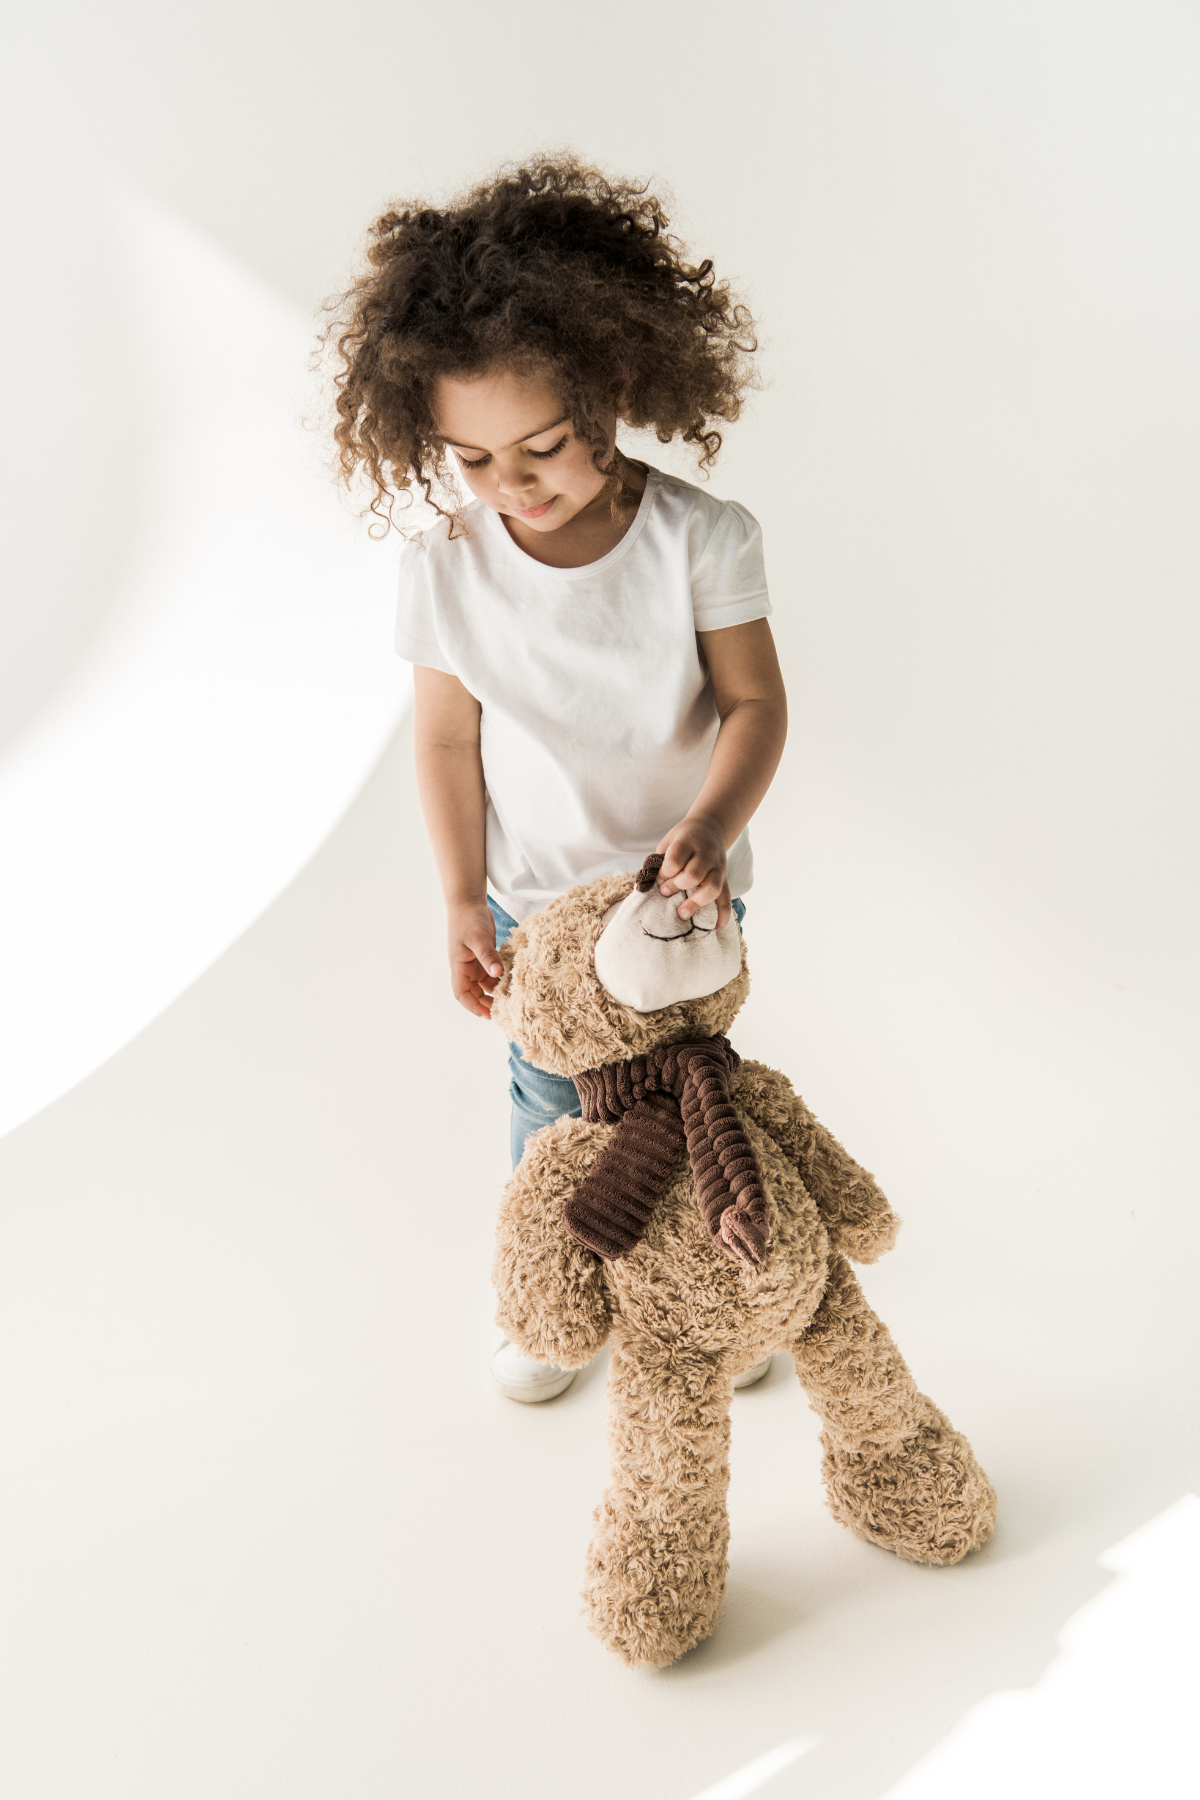 Toddler girl holds a teddy bear.